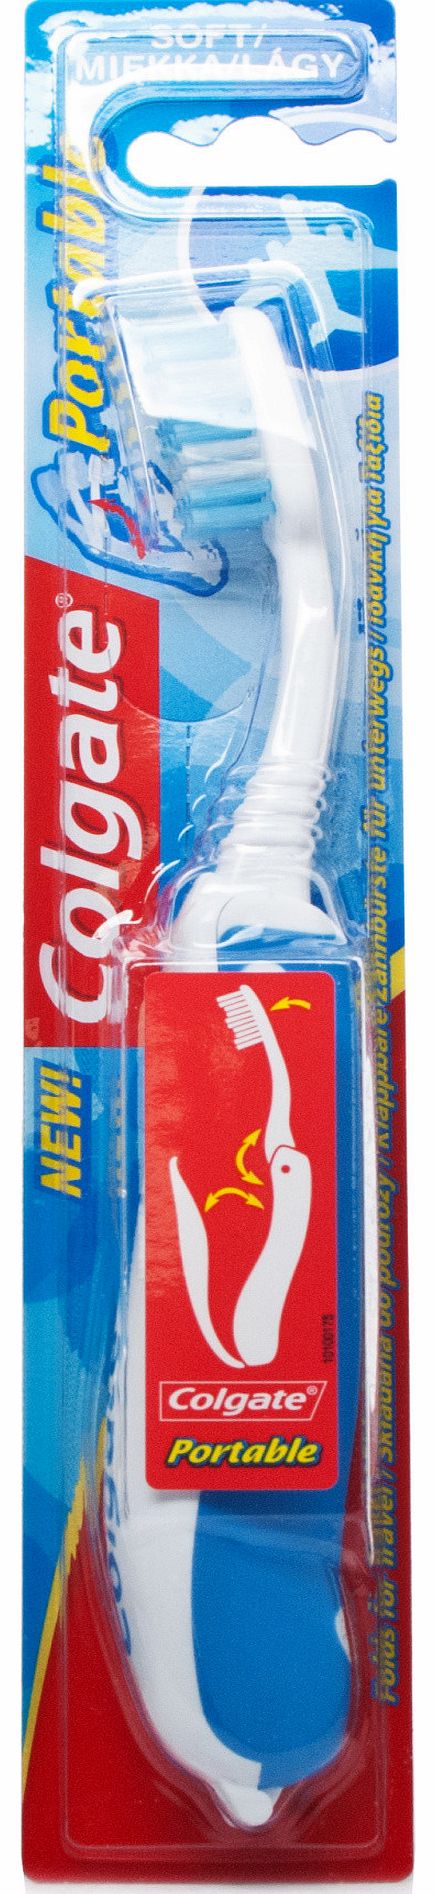 colgate Portable Toothbrush